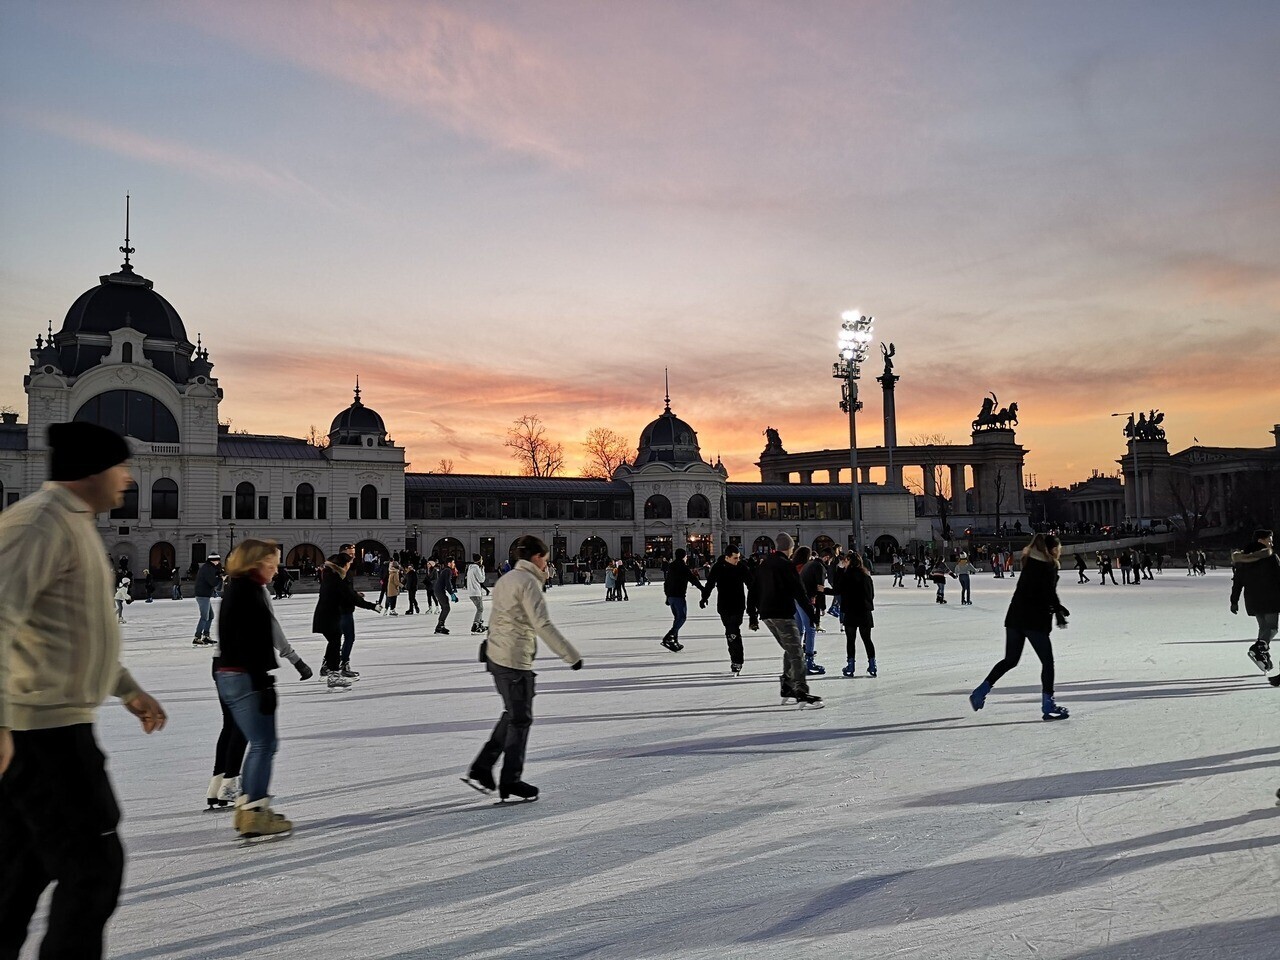 Budapest Park Ice Rink Ice-skating